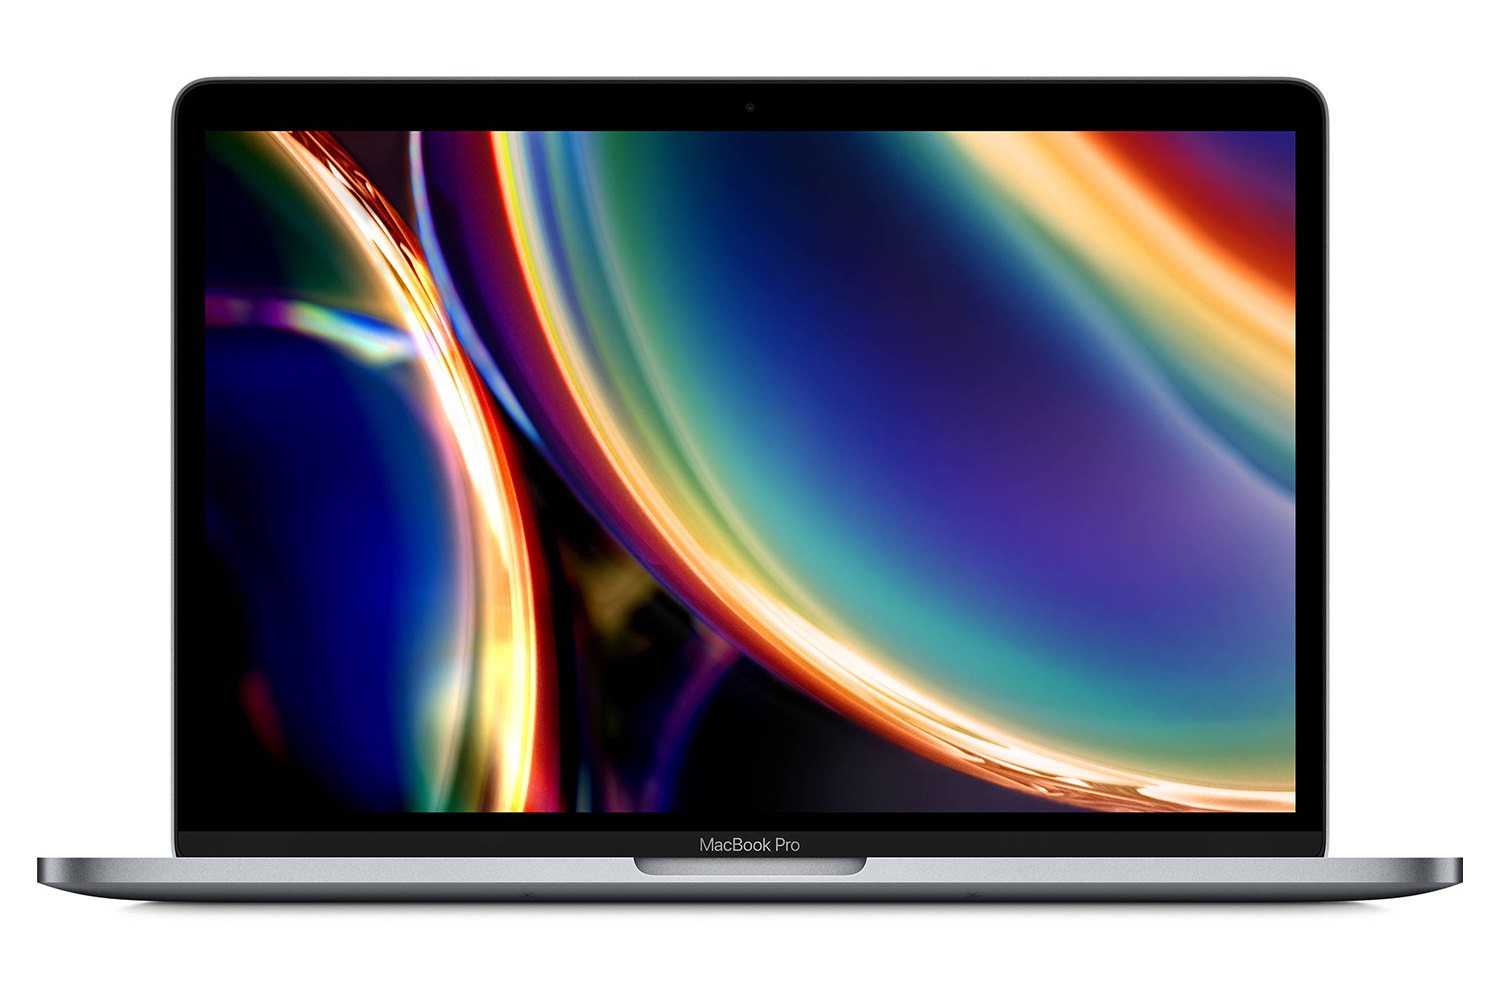 مک بوک پرو 13 اینچی 2020 اپل - Core i7-1068NG7 Iris Plus 32GB 1TB